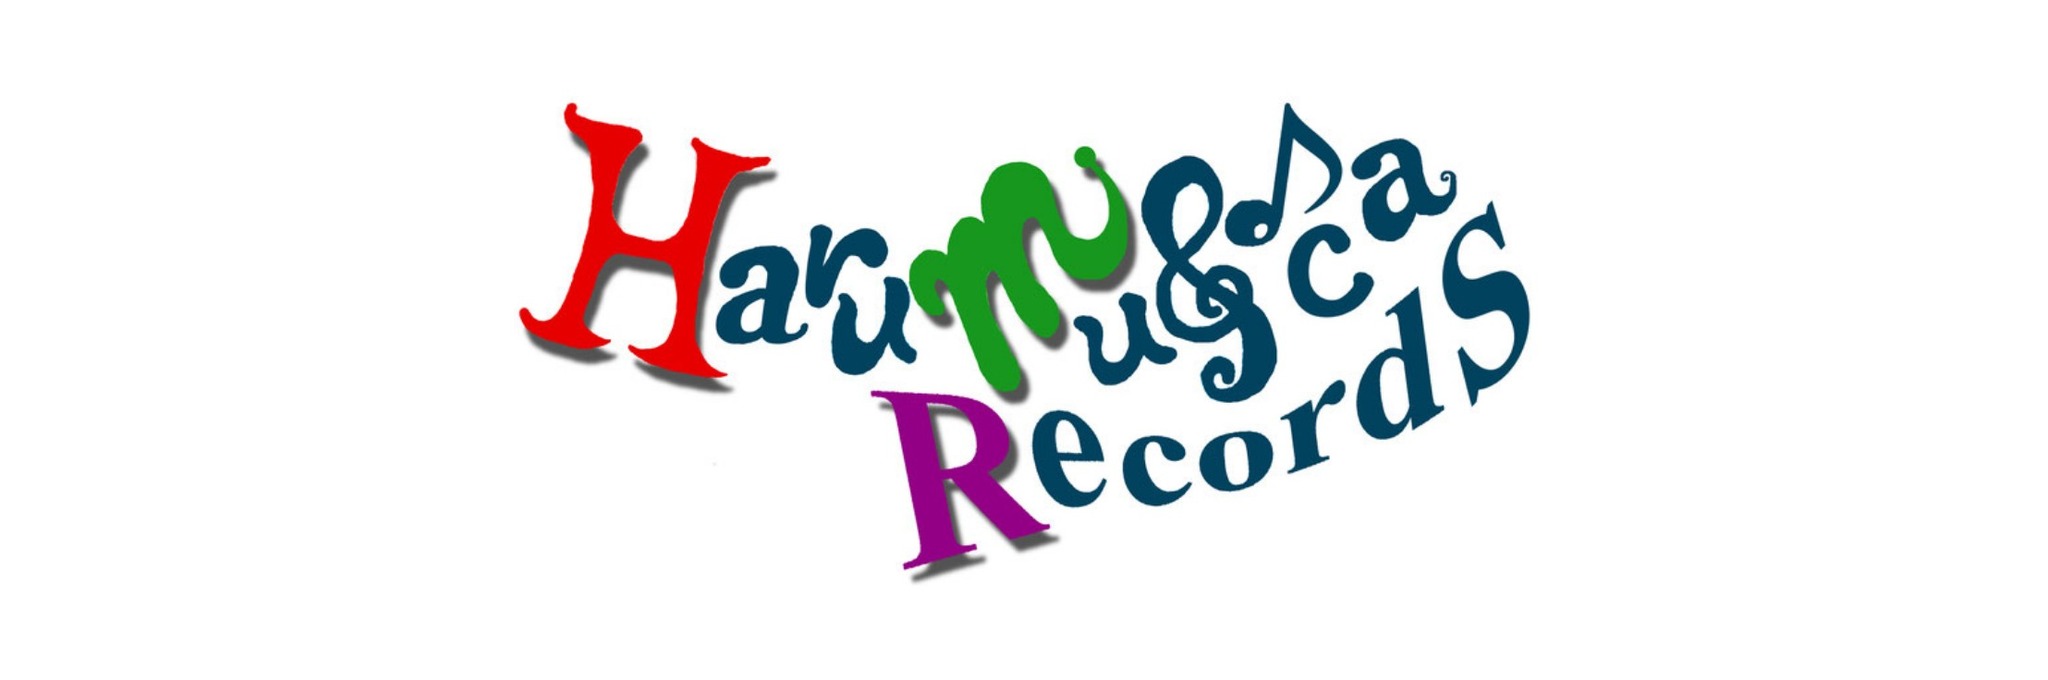 Harumusica Records